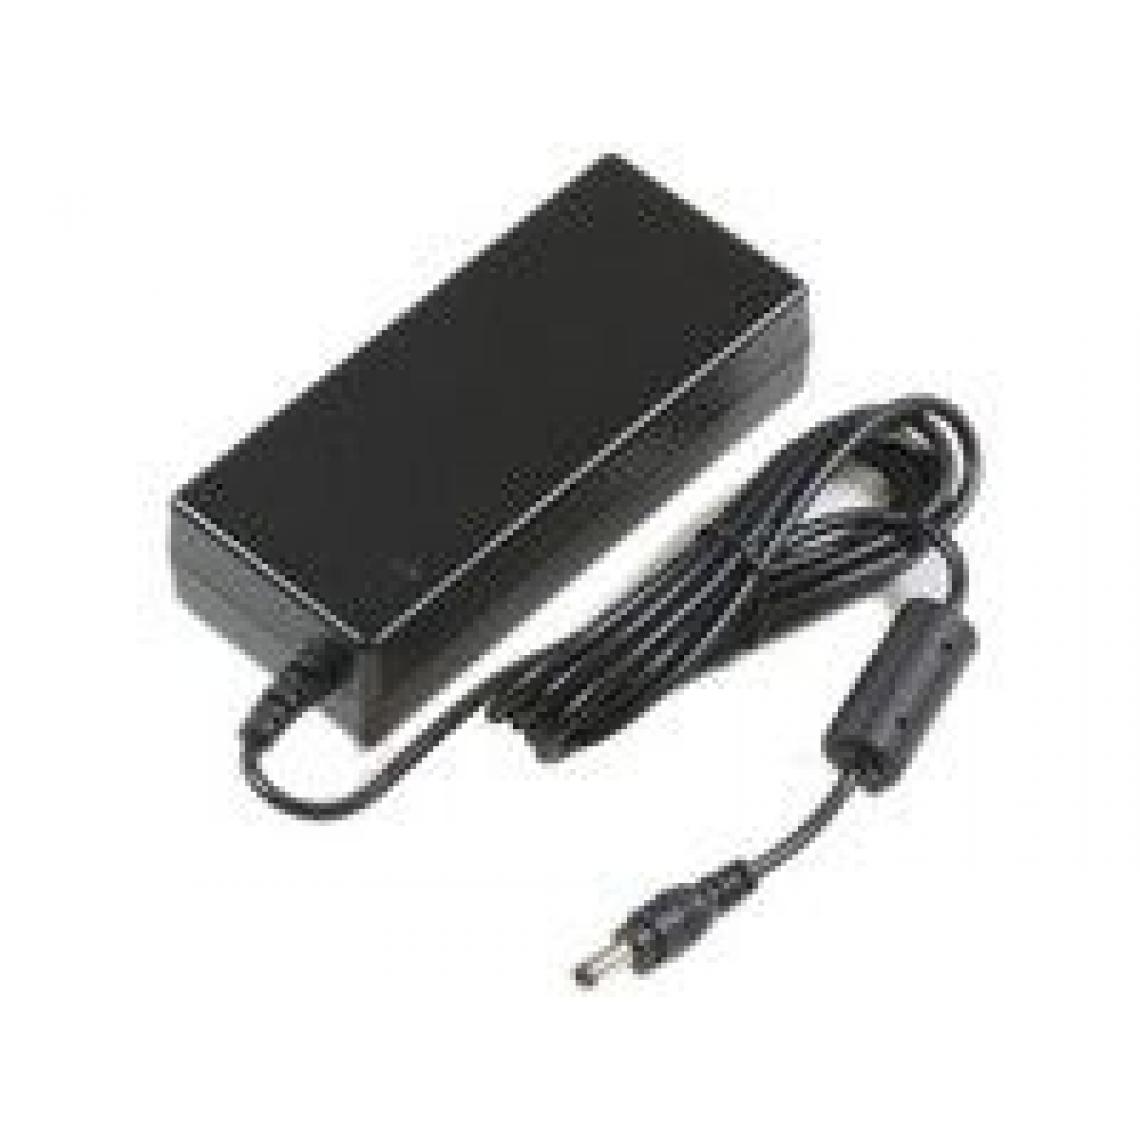 Inconnu - 19V 4.74A 90W Plug: 5.5*2.5 AC Adapter for Medion **including power cord** - Chargeur secteur téléphone